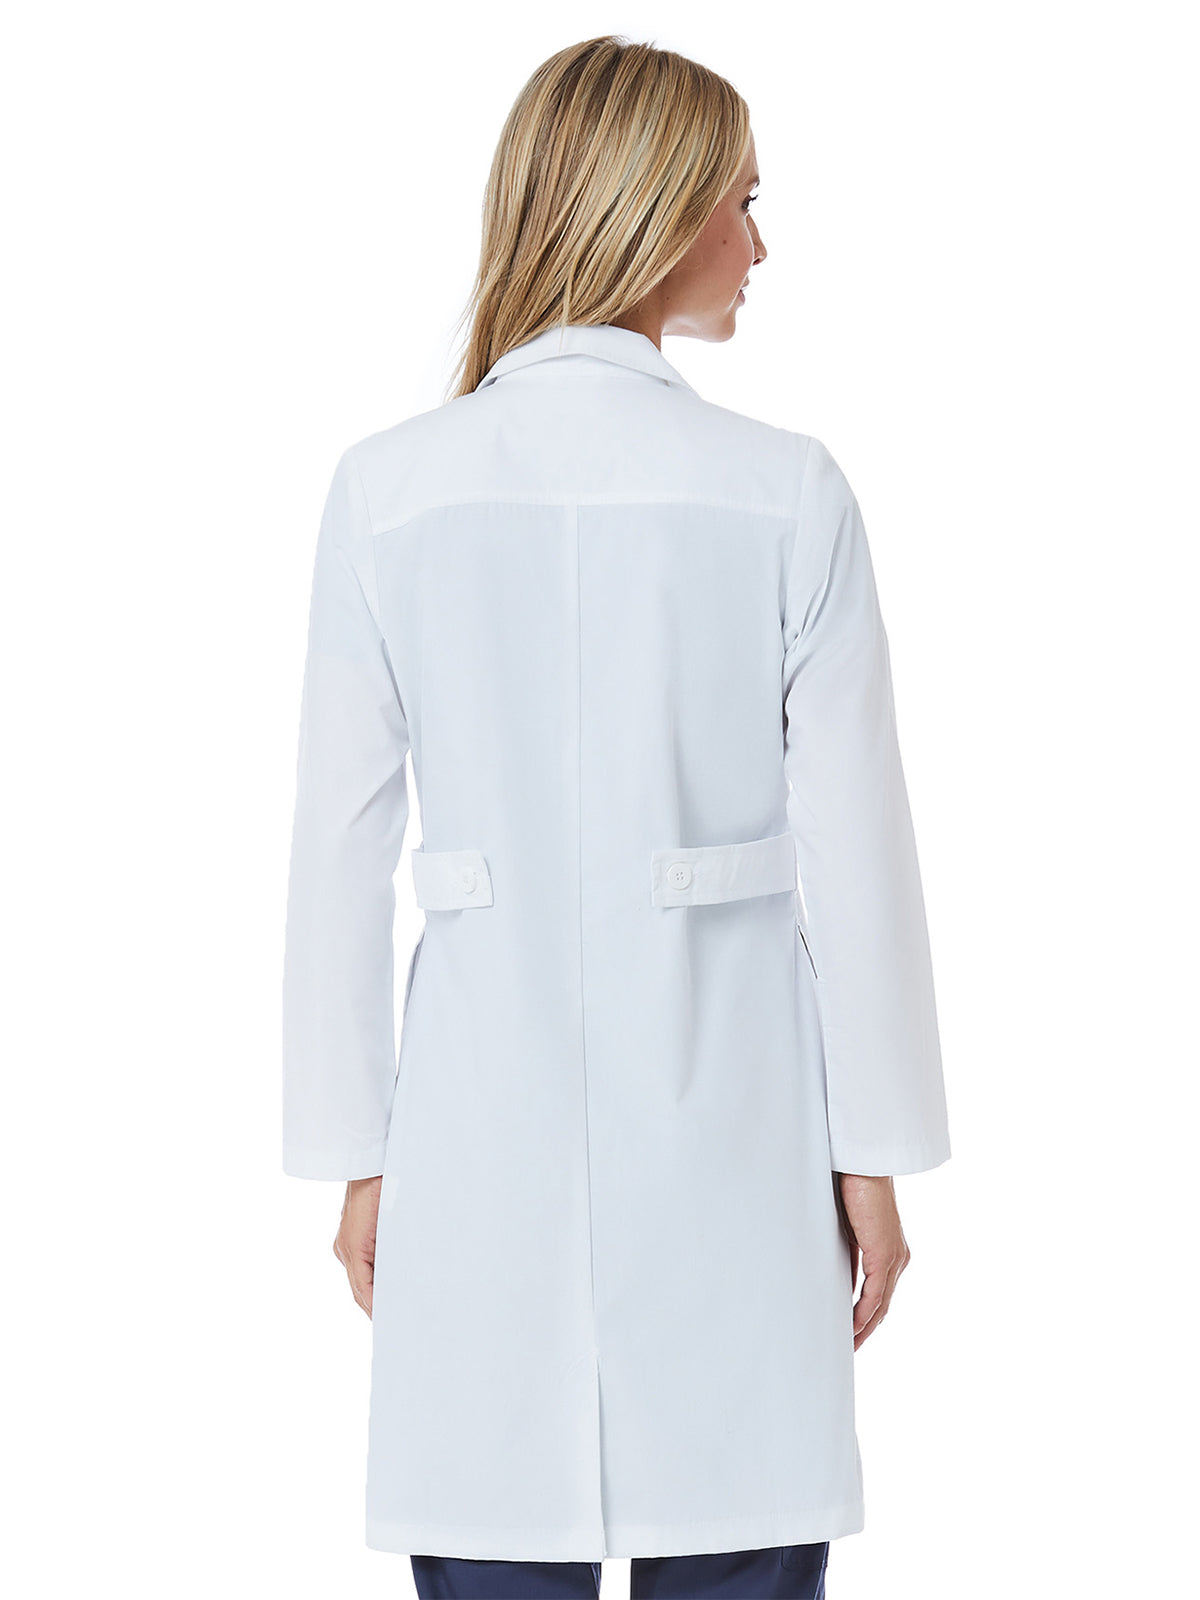 Women's Long Lab Coat - 7156 - White